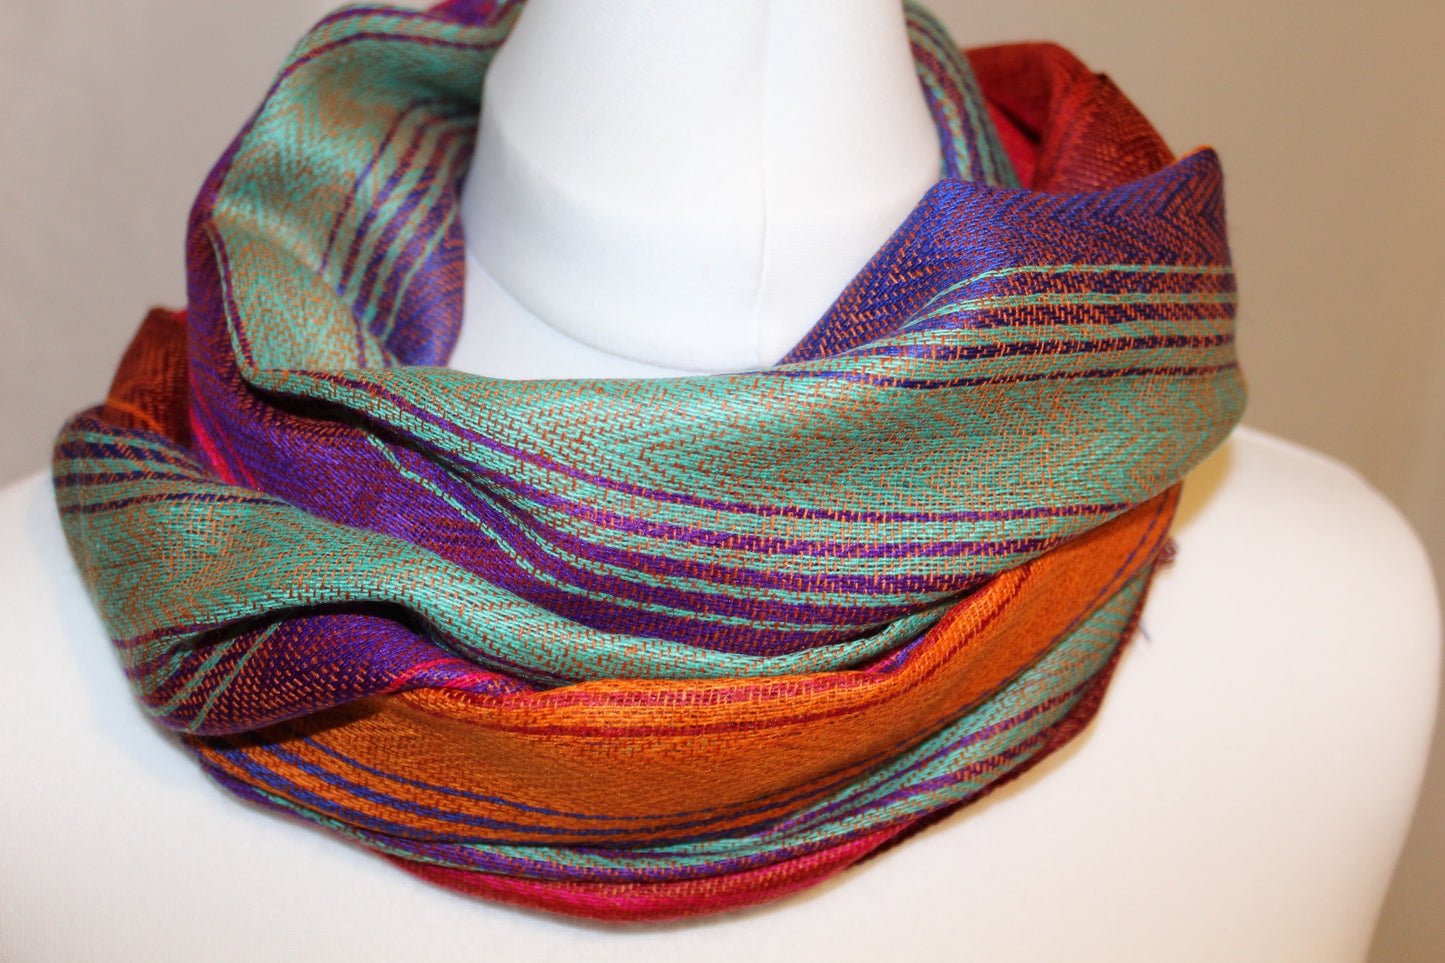 Stunning colourful handwoven scarves, artisan from Ecuador